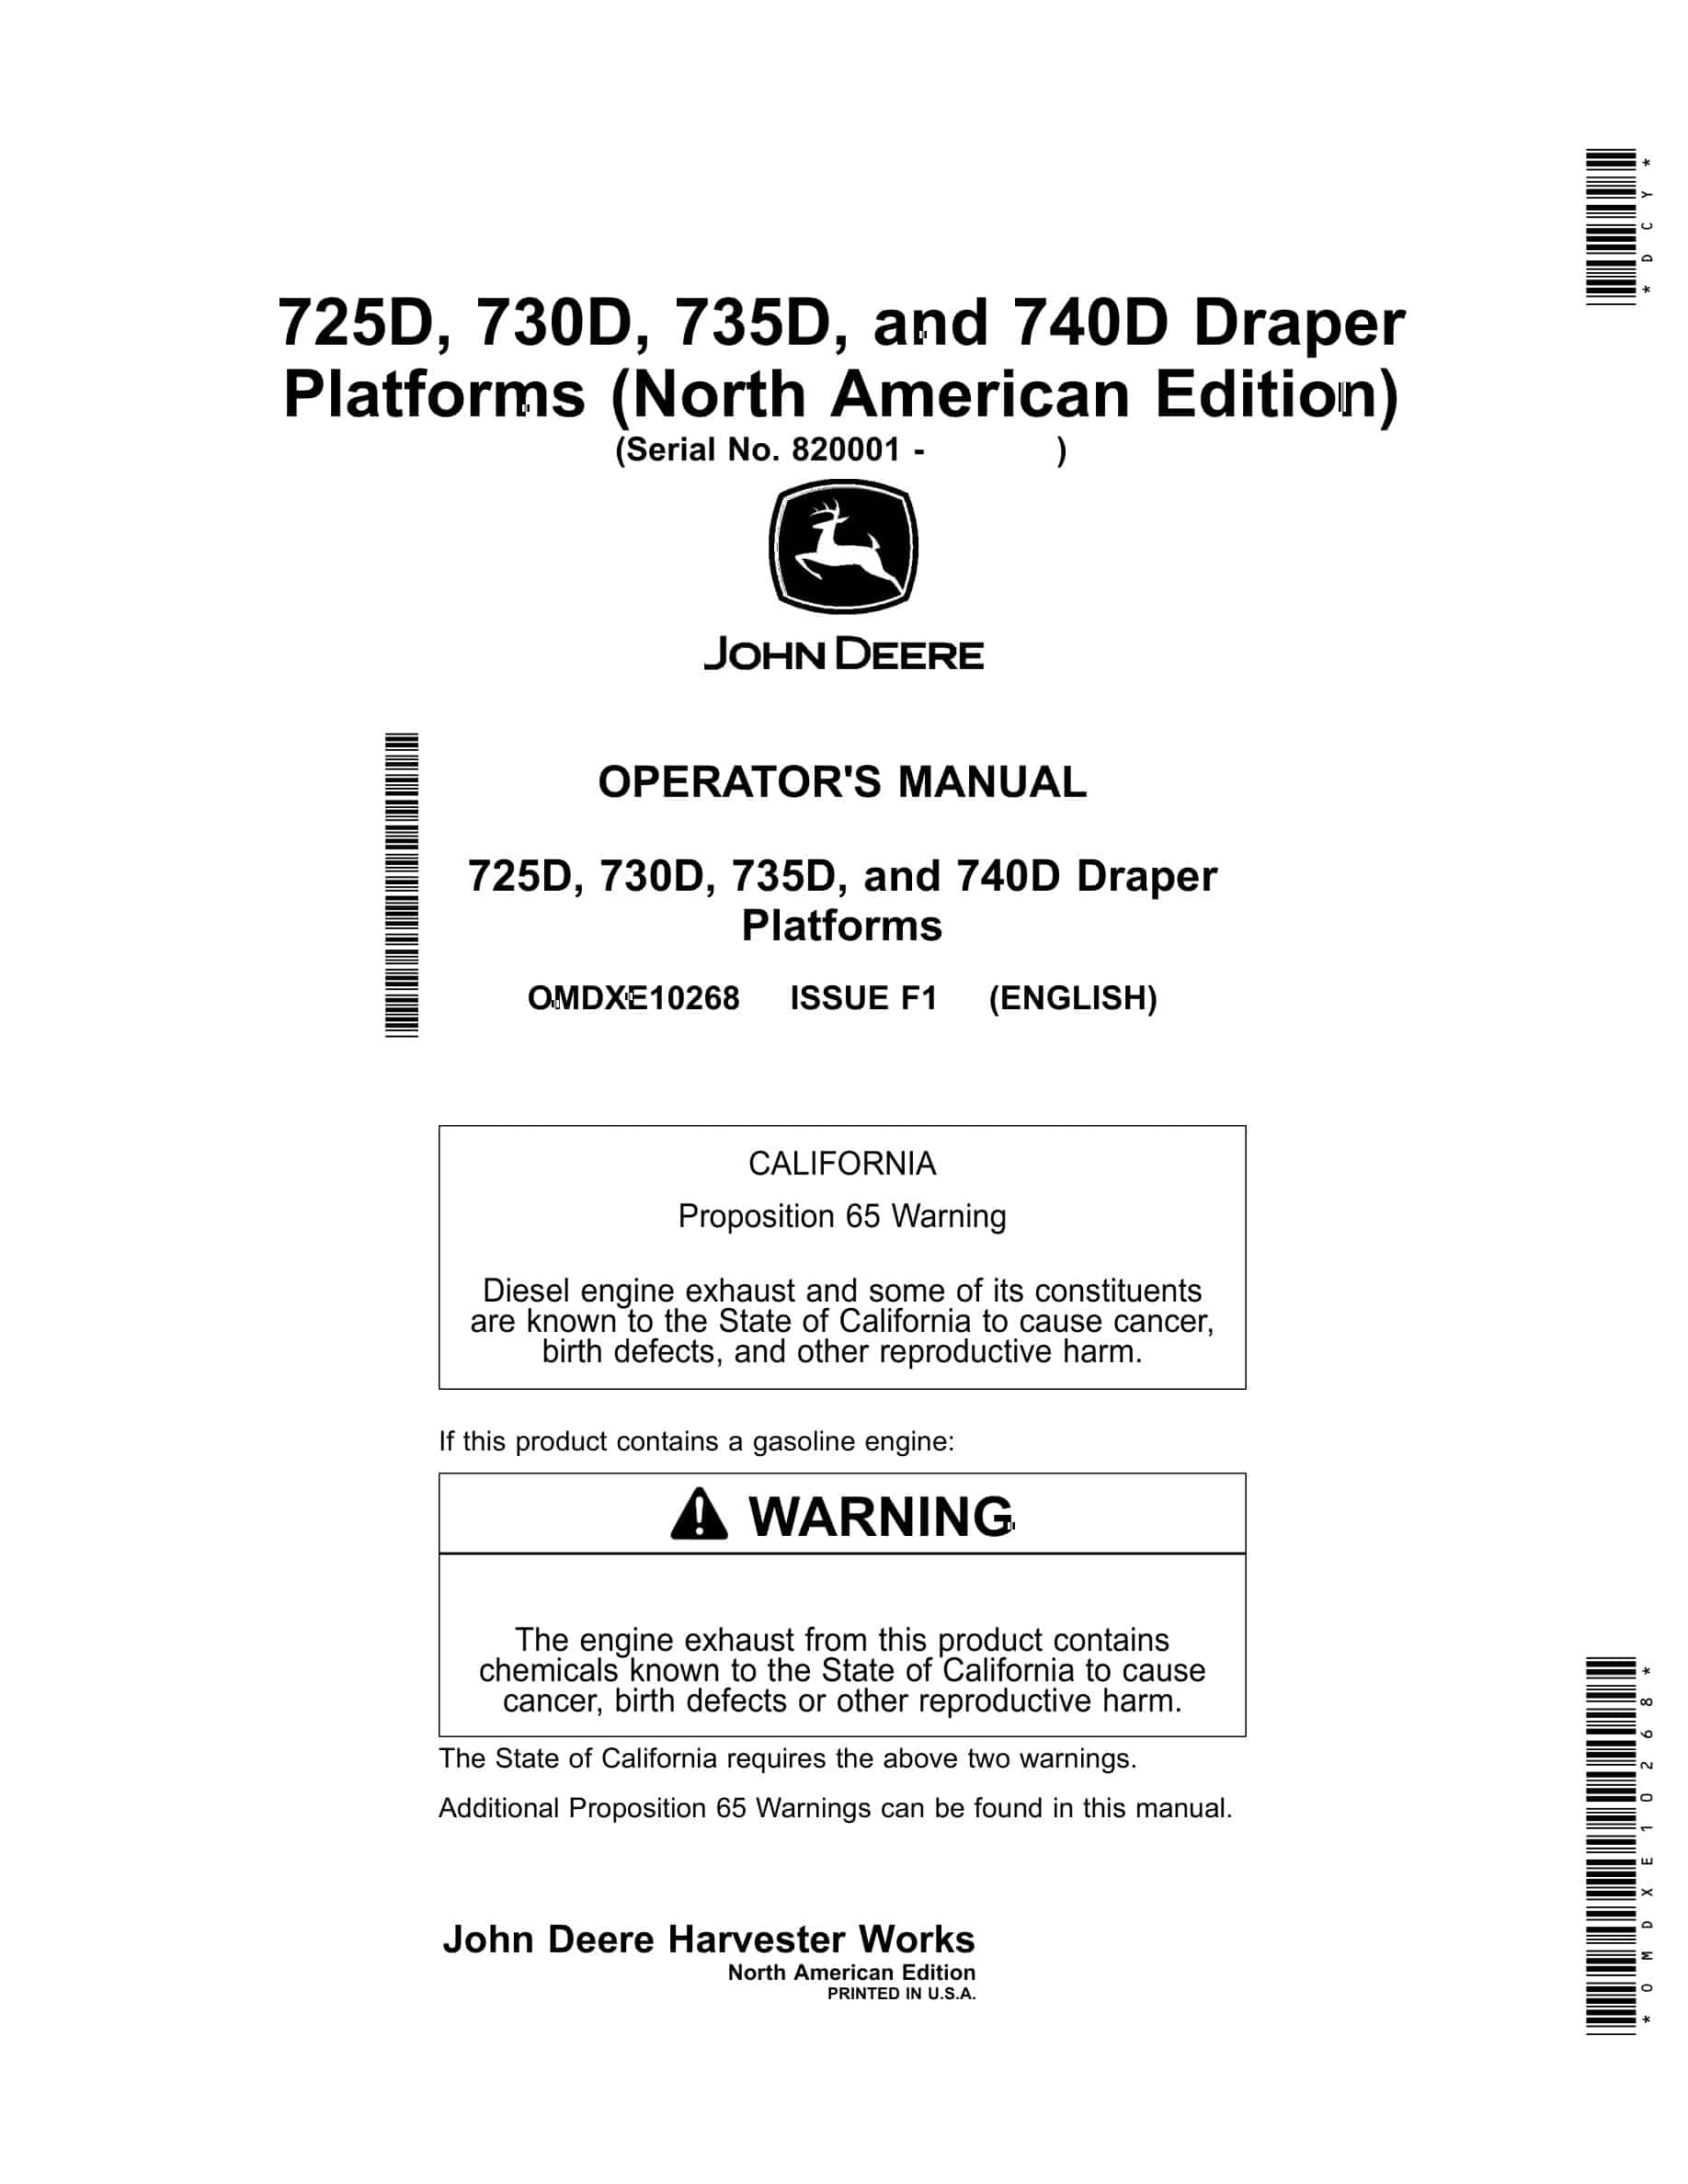 John Deere 725D, 730D, 735D, and 740D Draper Platforms Operator Manual OMDXE10268-1